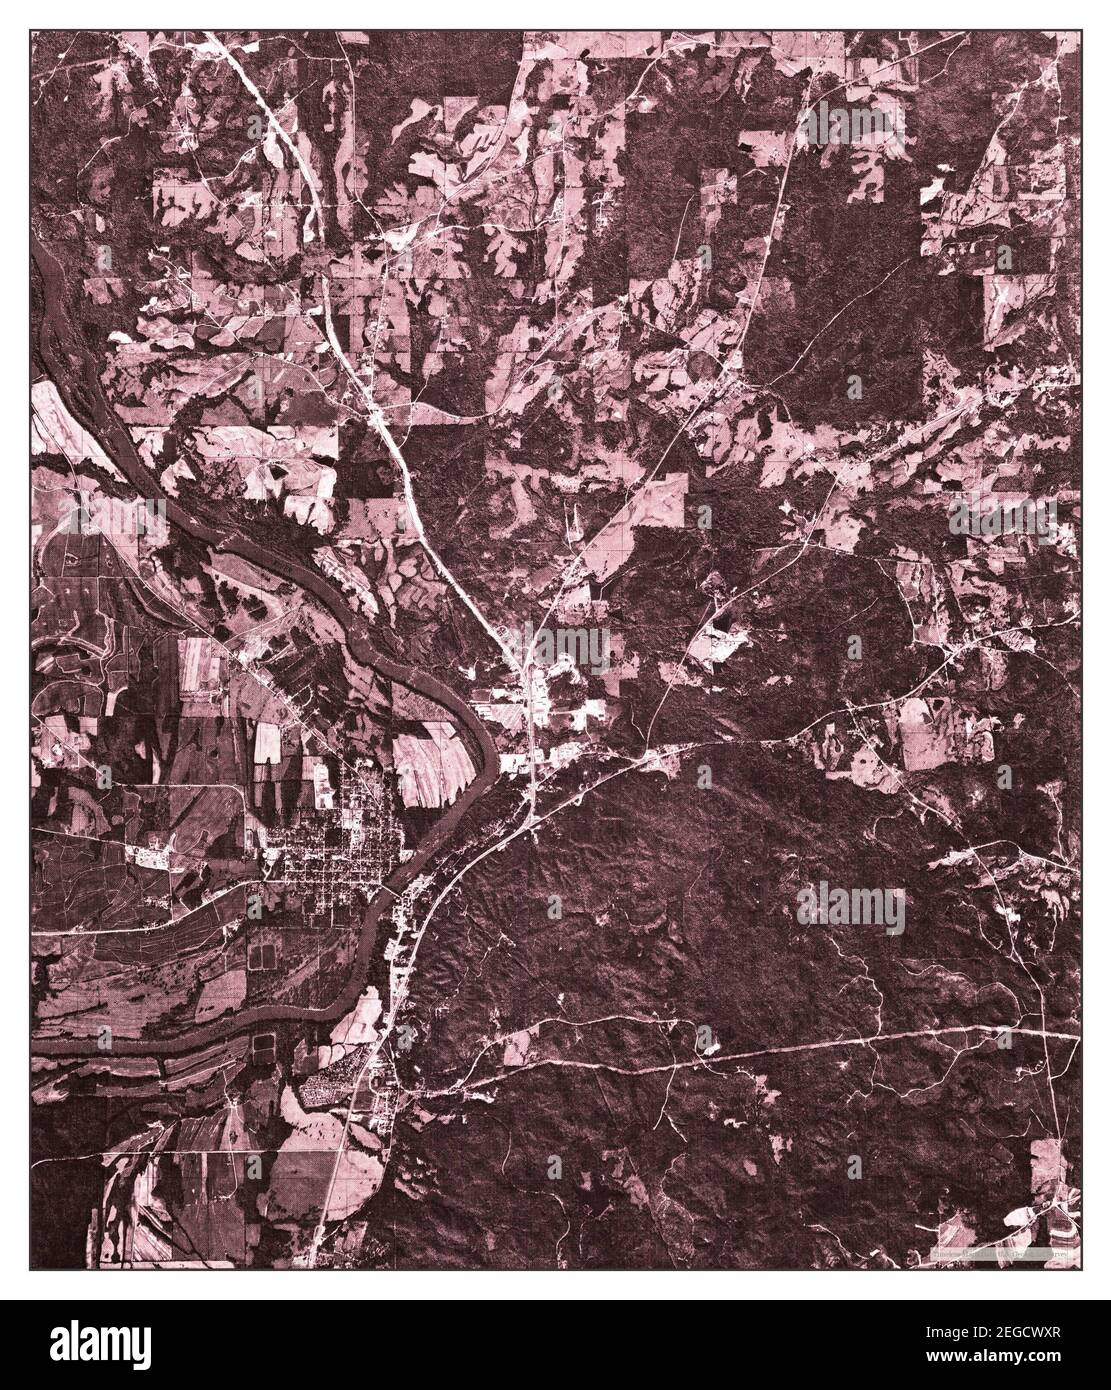 Wetumpka SW, Alabama, map 1975, 1:24000, United States of America by Timeless Maps, data U.S. Geological Survey Stock Photo